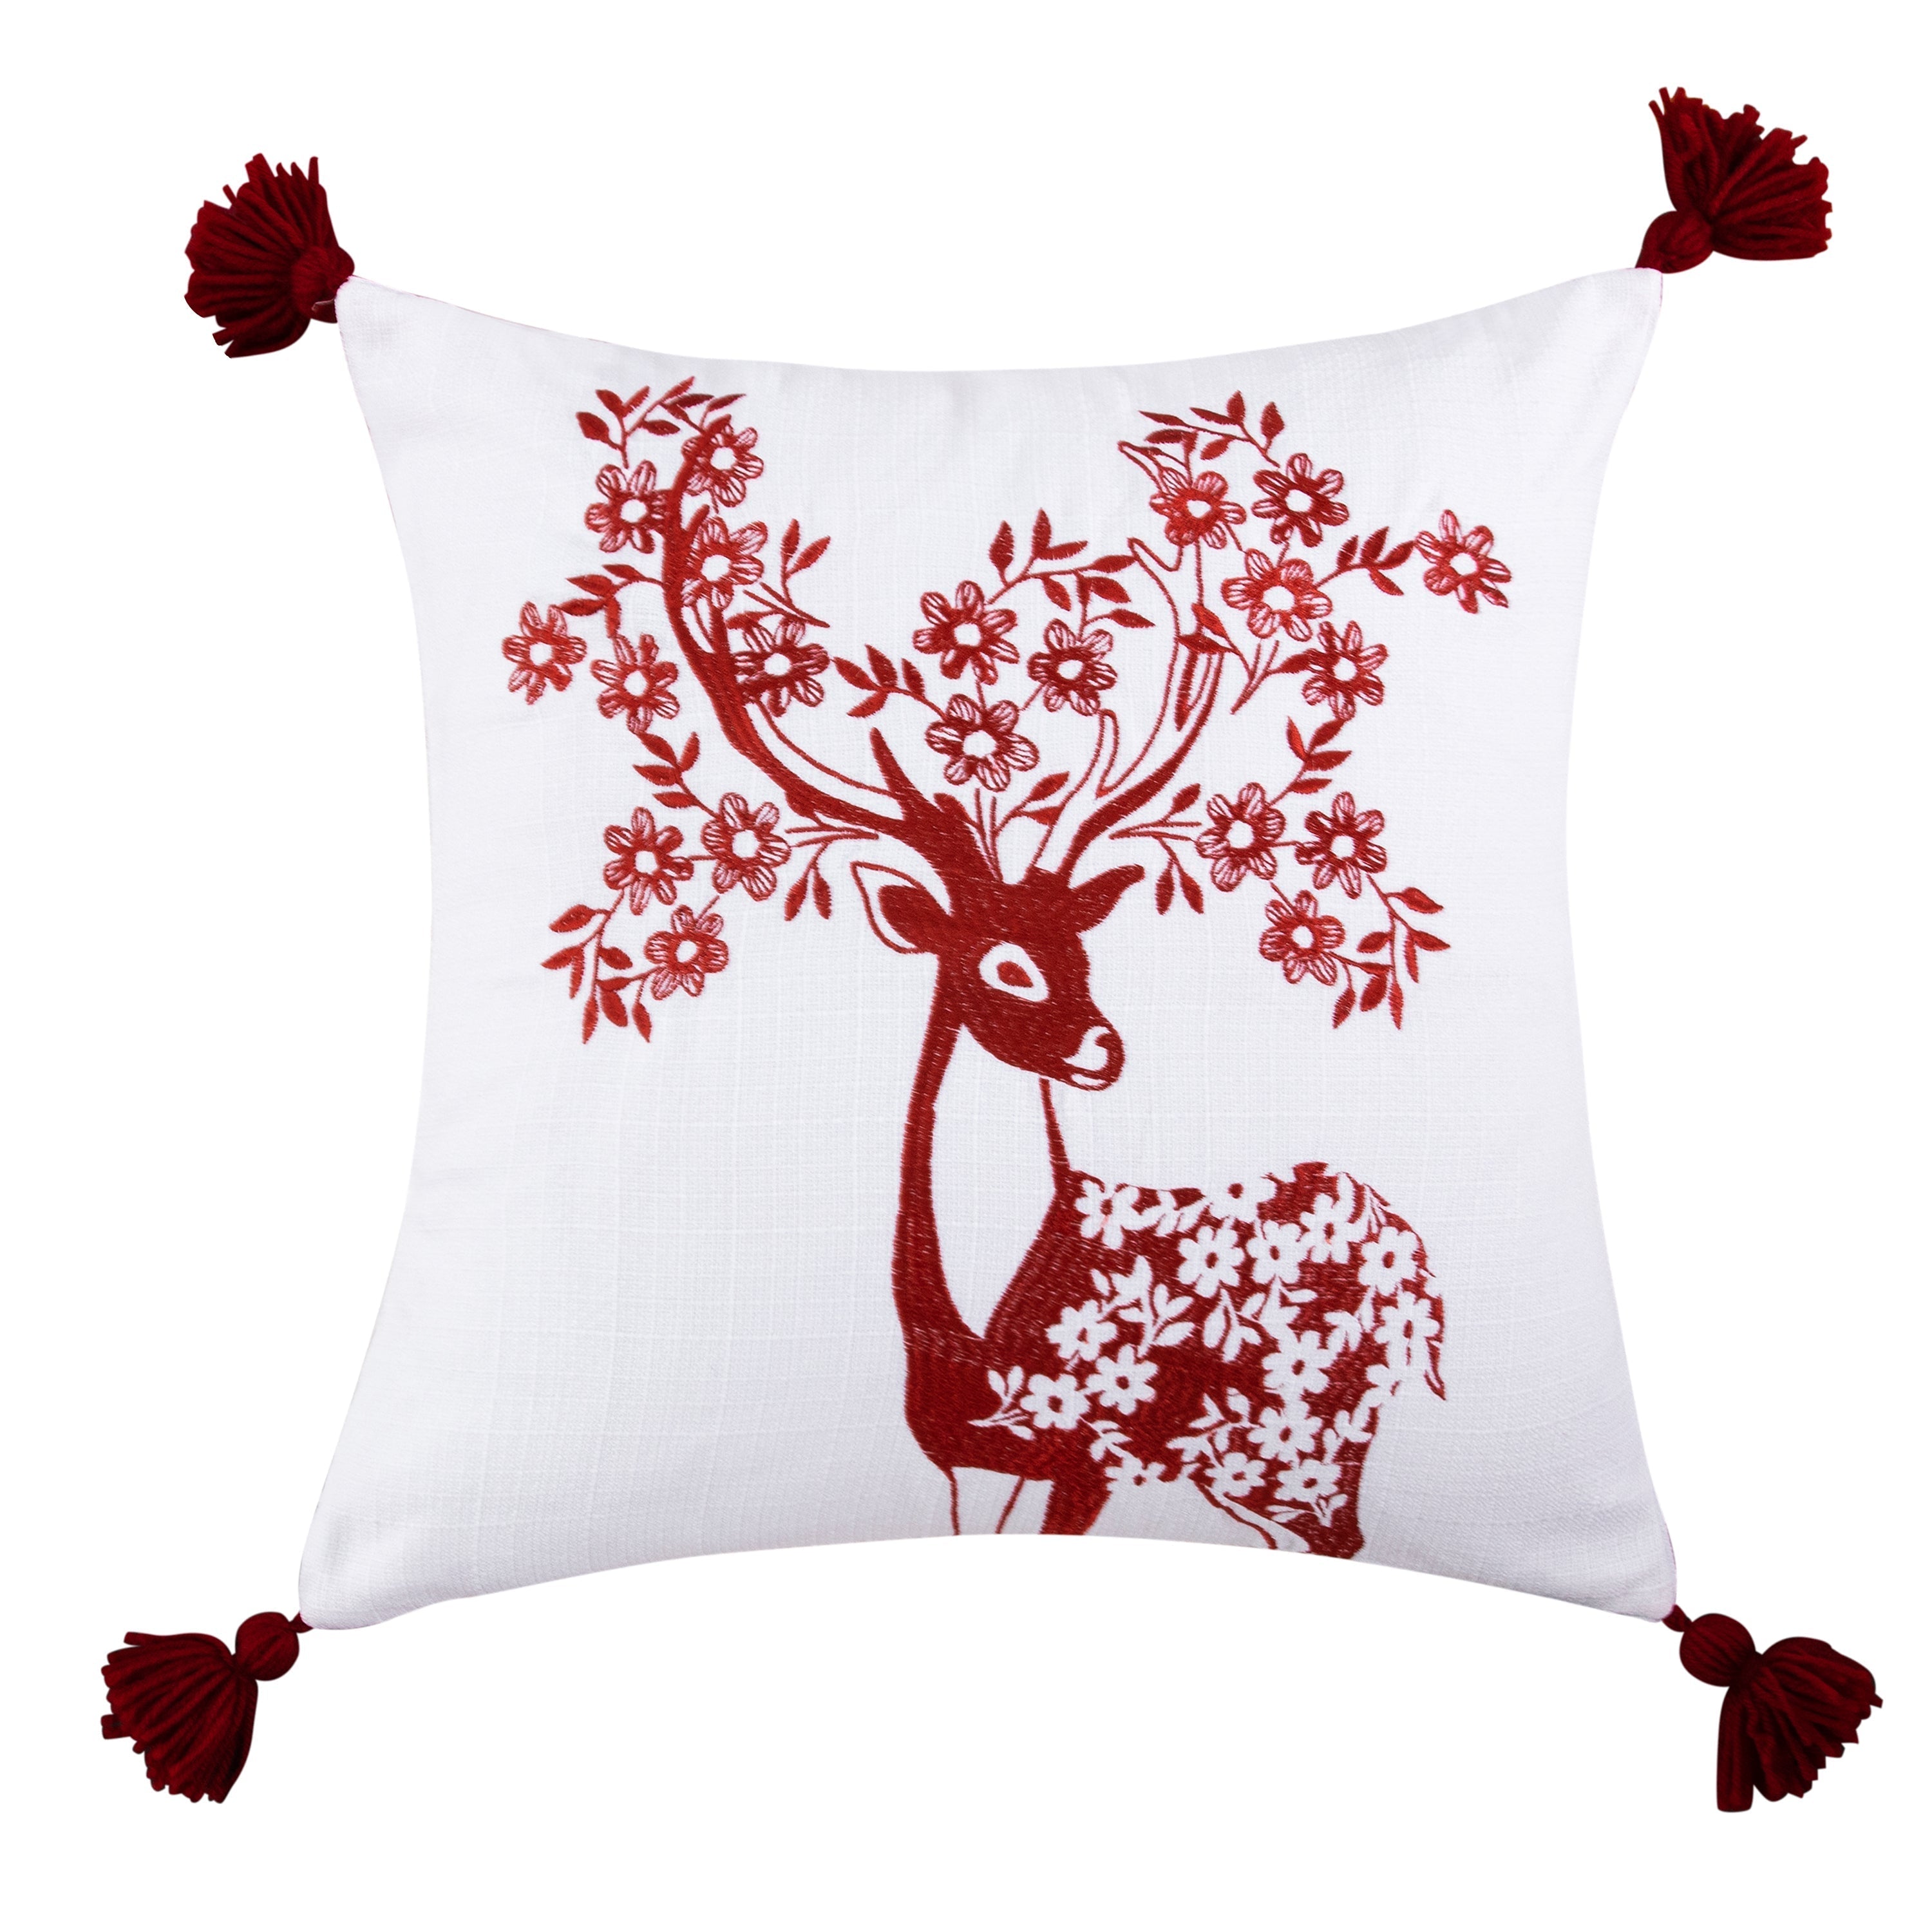 Sleigh Bells Red Deer Embroidered Pillow 18x18